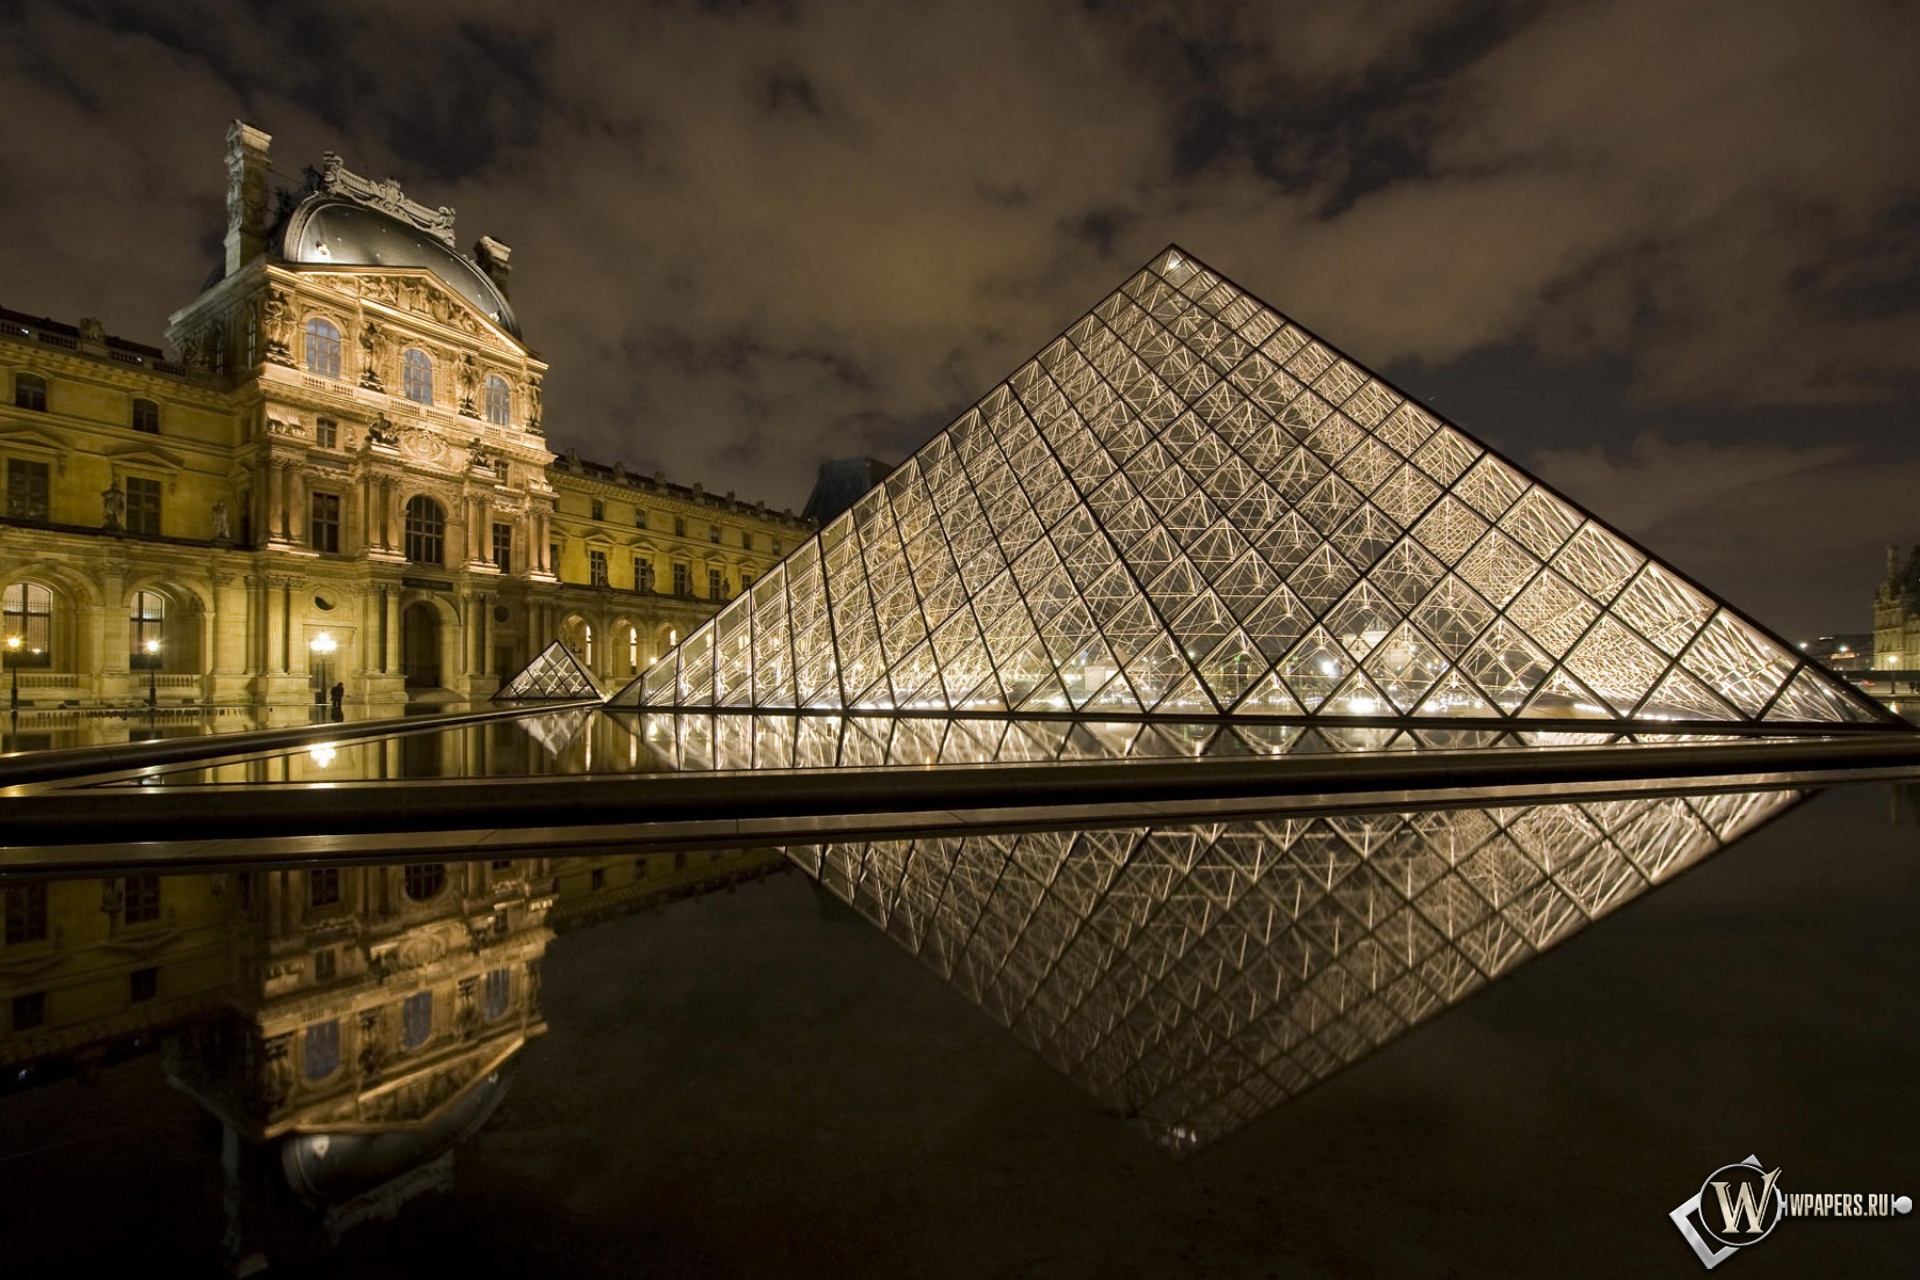 De louvre. Музеи. Лувр. Париж. Франция музей Лувр. Пирамида музей Лувр. Лувр музей Париж Архитектор.